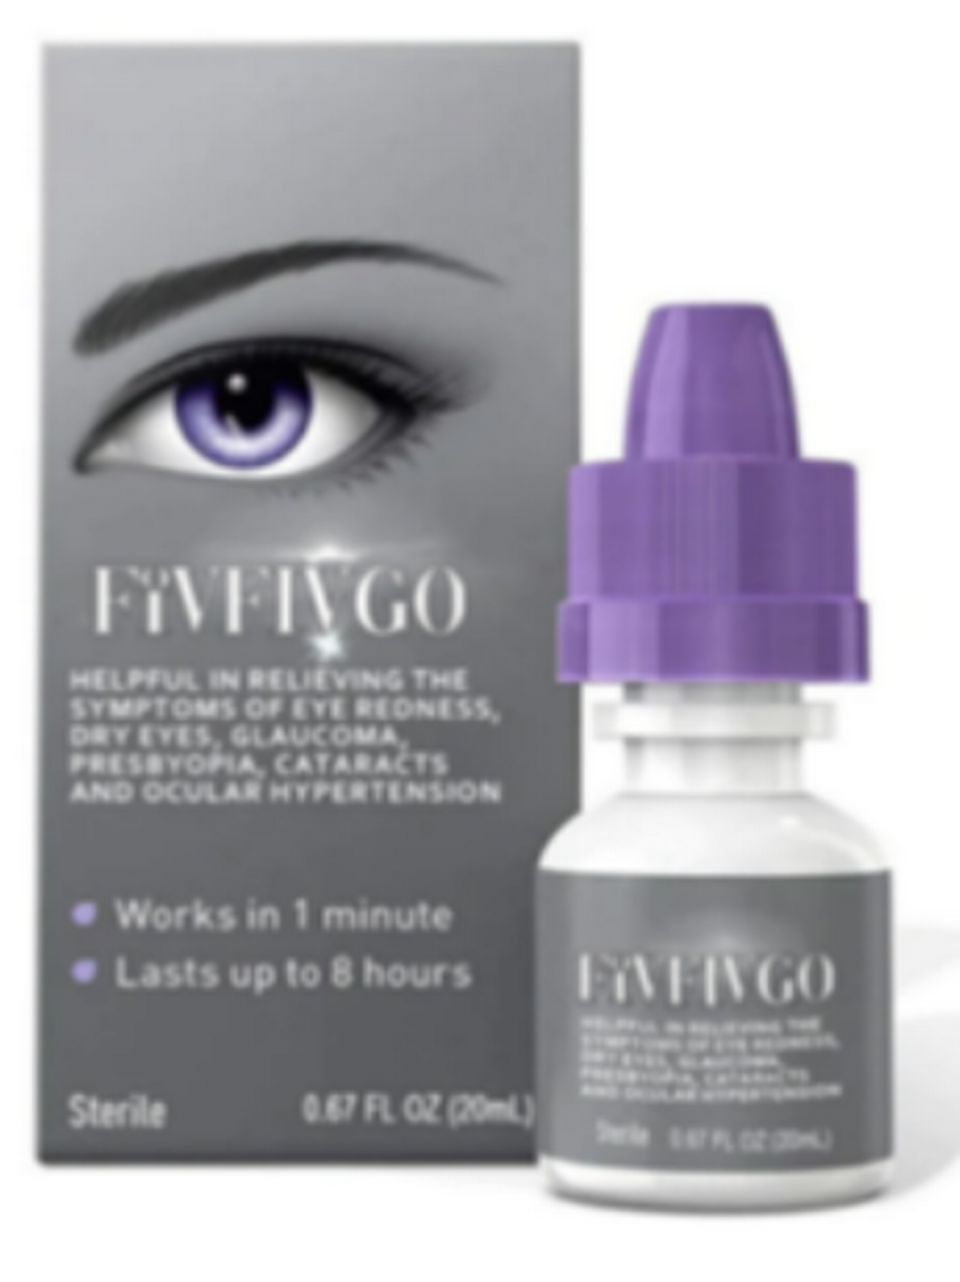 The FDA warning includes FivFivGo eye drops. FDA